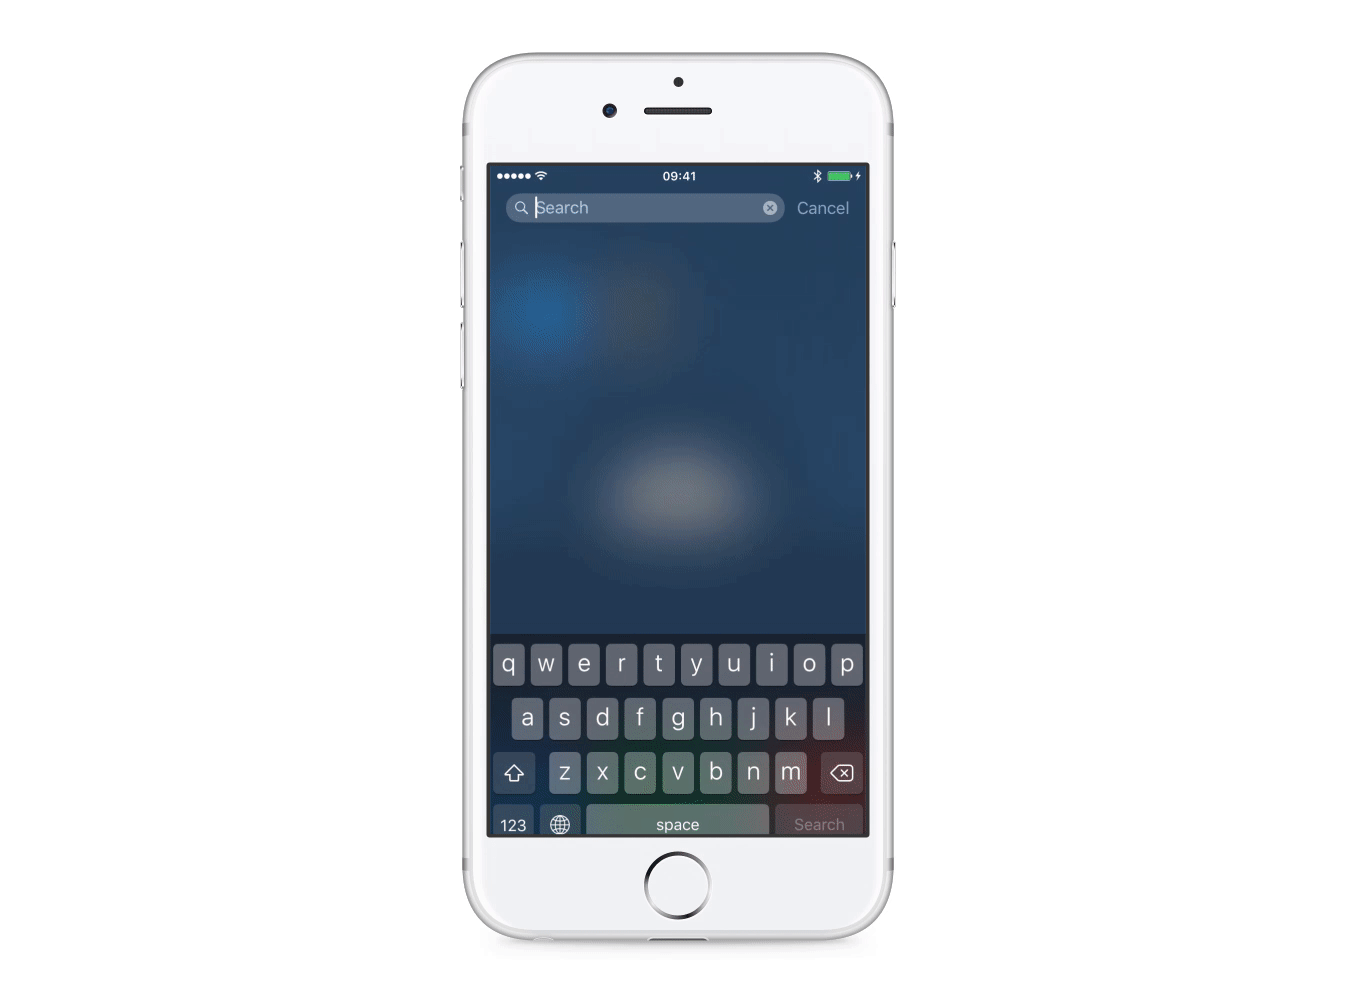 Todoist for iOS 9 - Spotlight Search